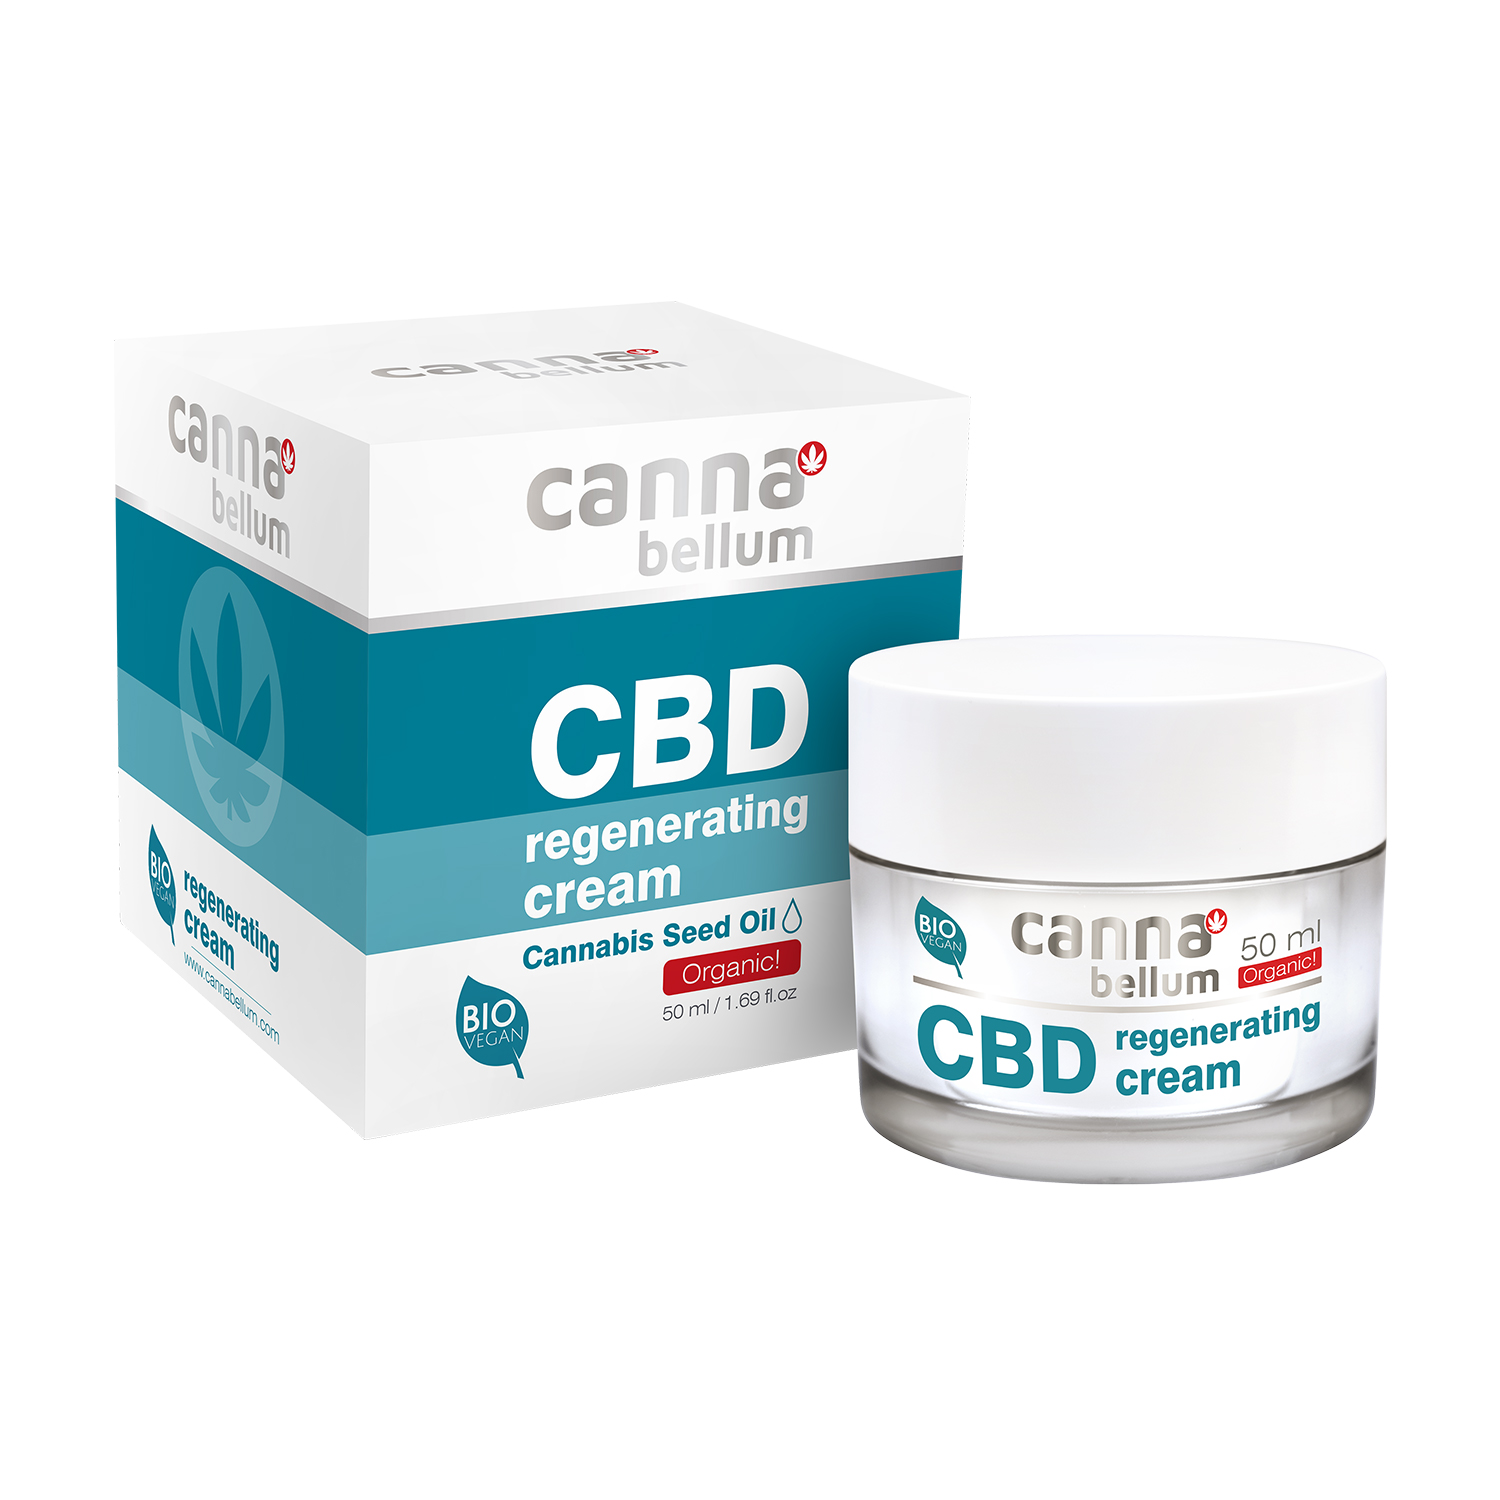 Cannabellum CBD regenerating cream 50ml P1253 komplet WEB 35